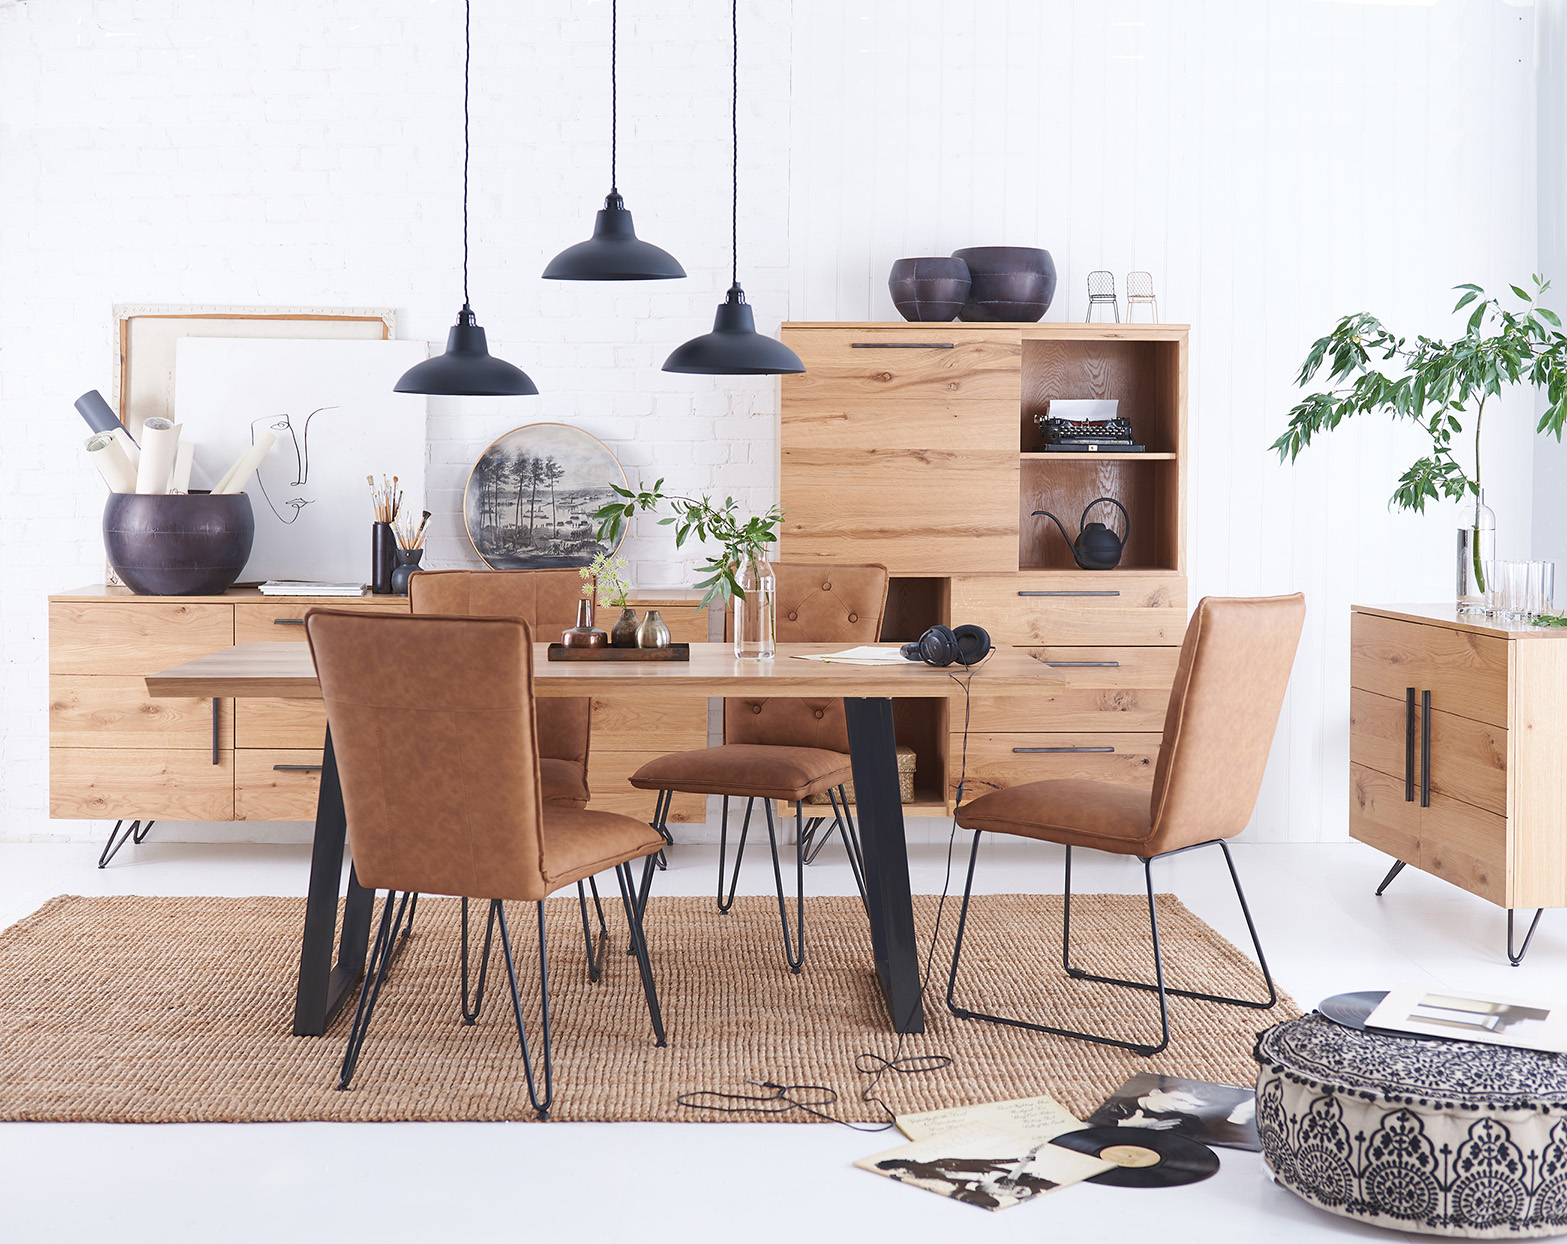 Minimalist Dining Room Furniture Northern Ireland with Simple Decor